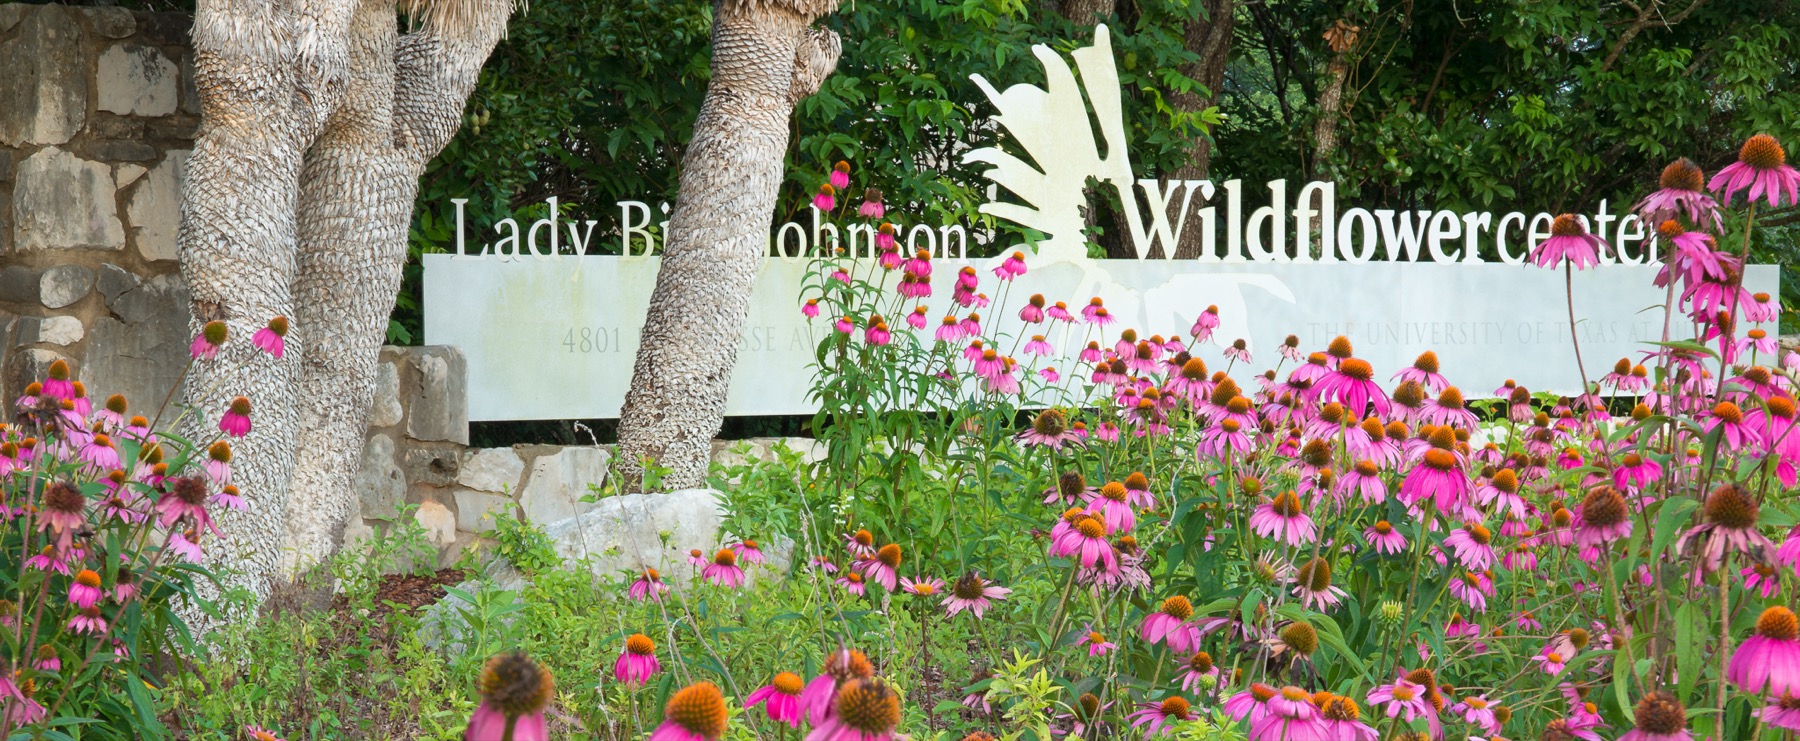 Lady Bird Johnson Wildflower Center.